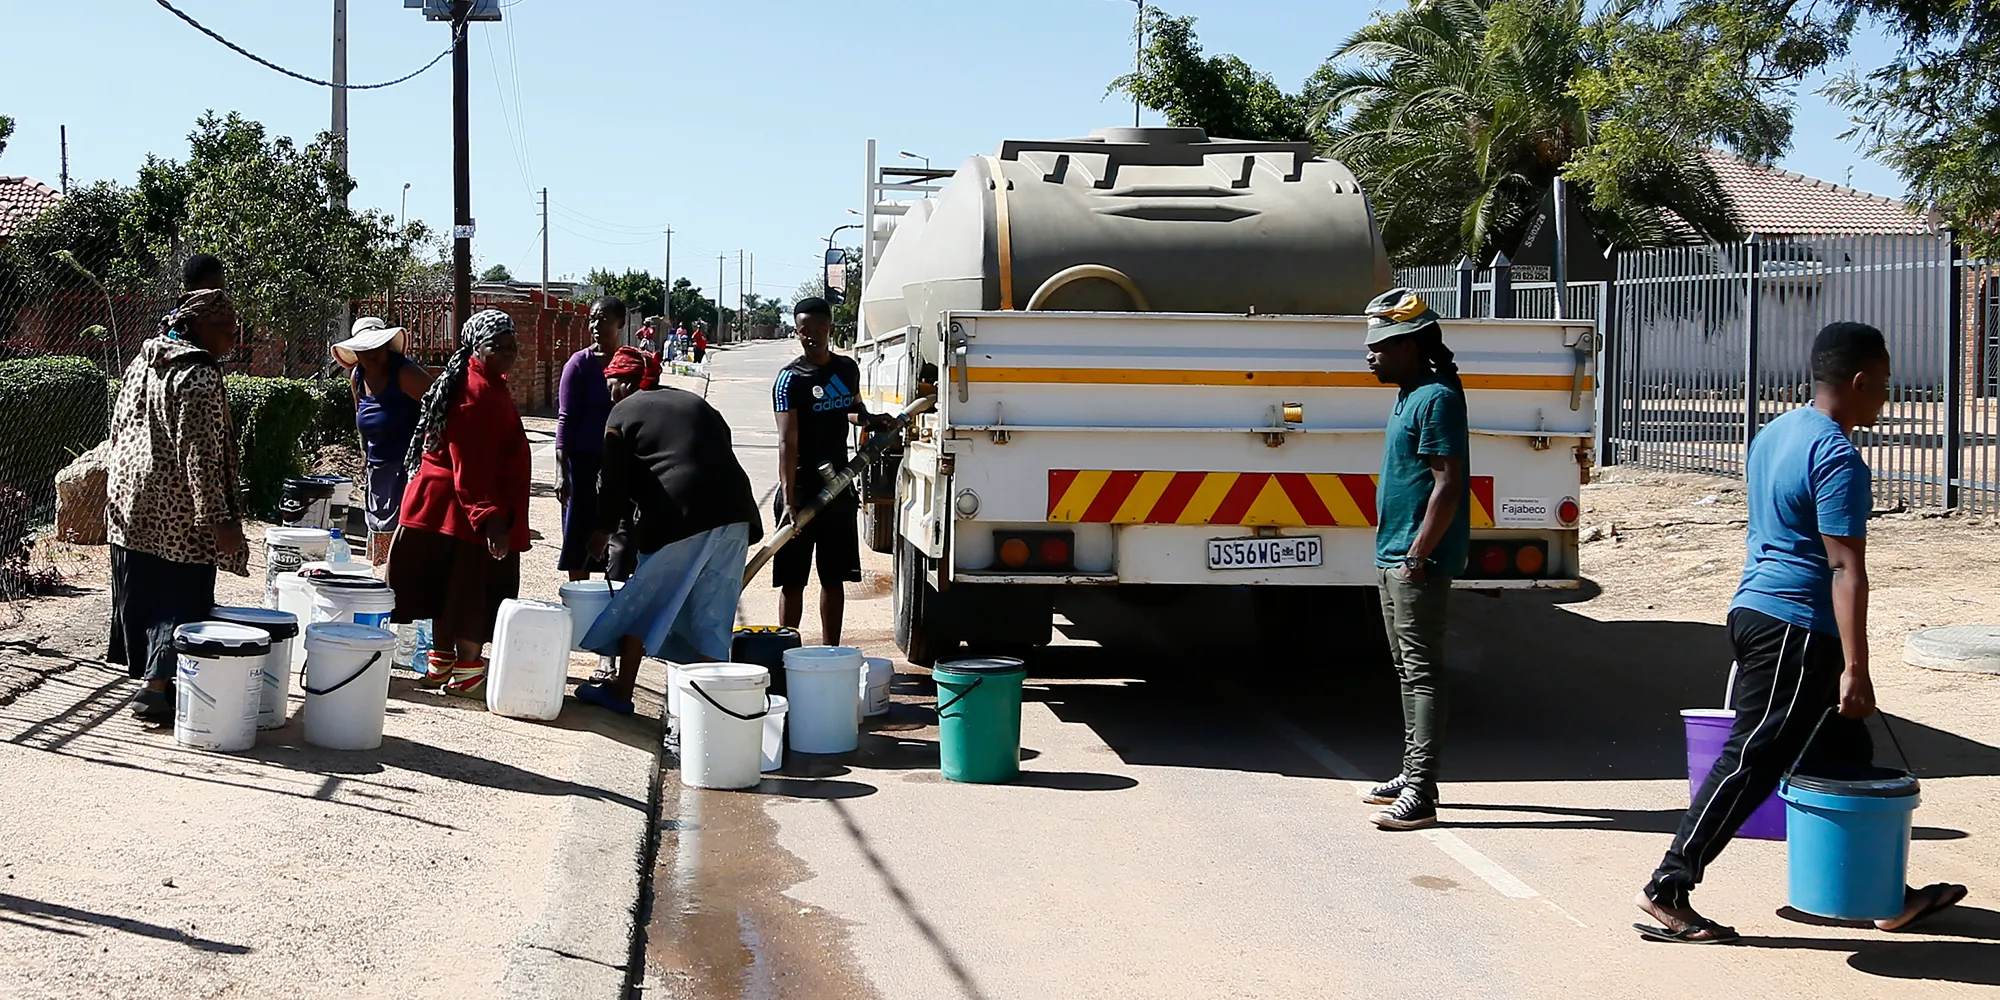 Water Crisis Grips Johannesburg: Residents Endure Unprecedented Shortages